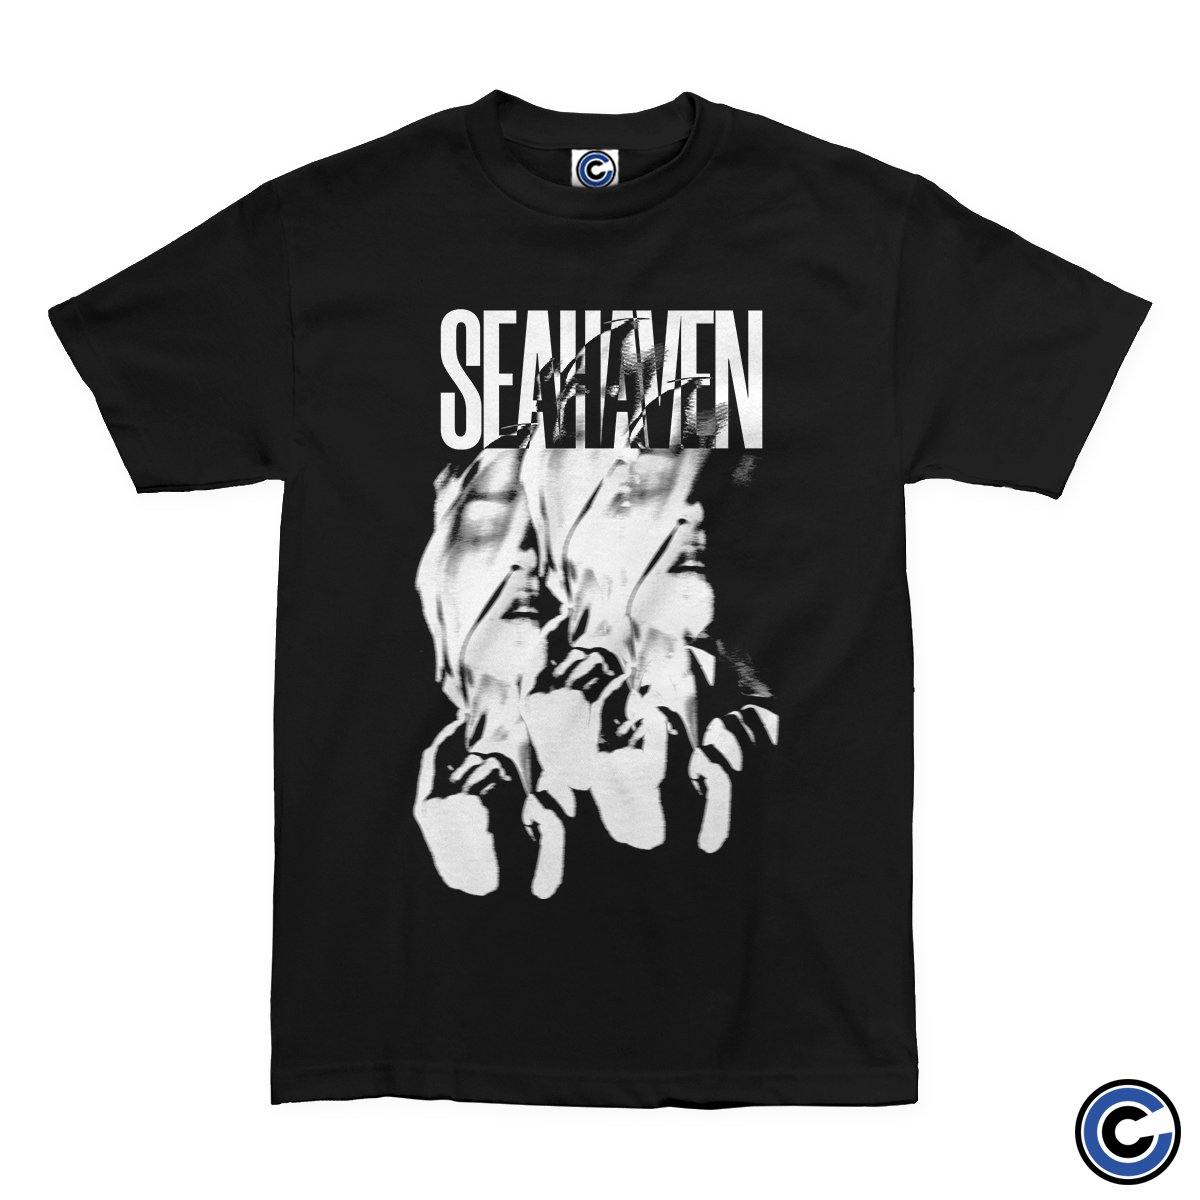 Buy – Seahaven "Hands" Shirt – Band & Music Merch – Cold Cuts Merch